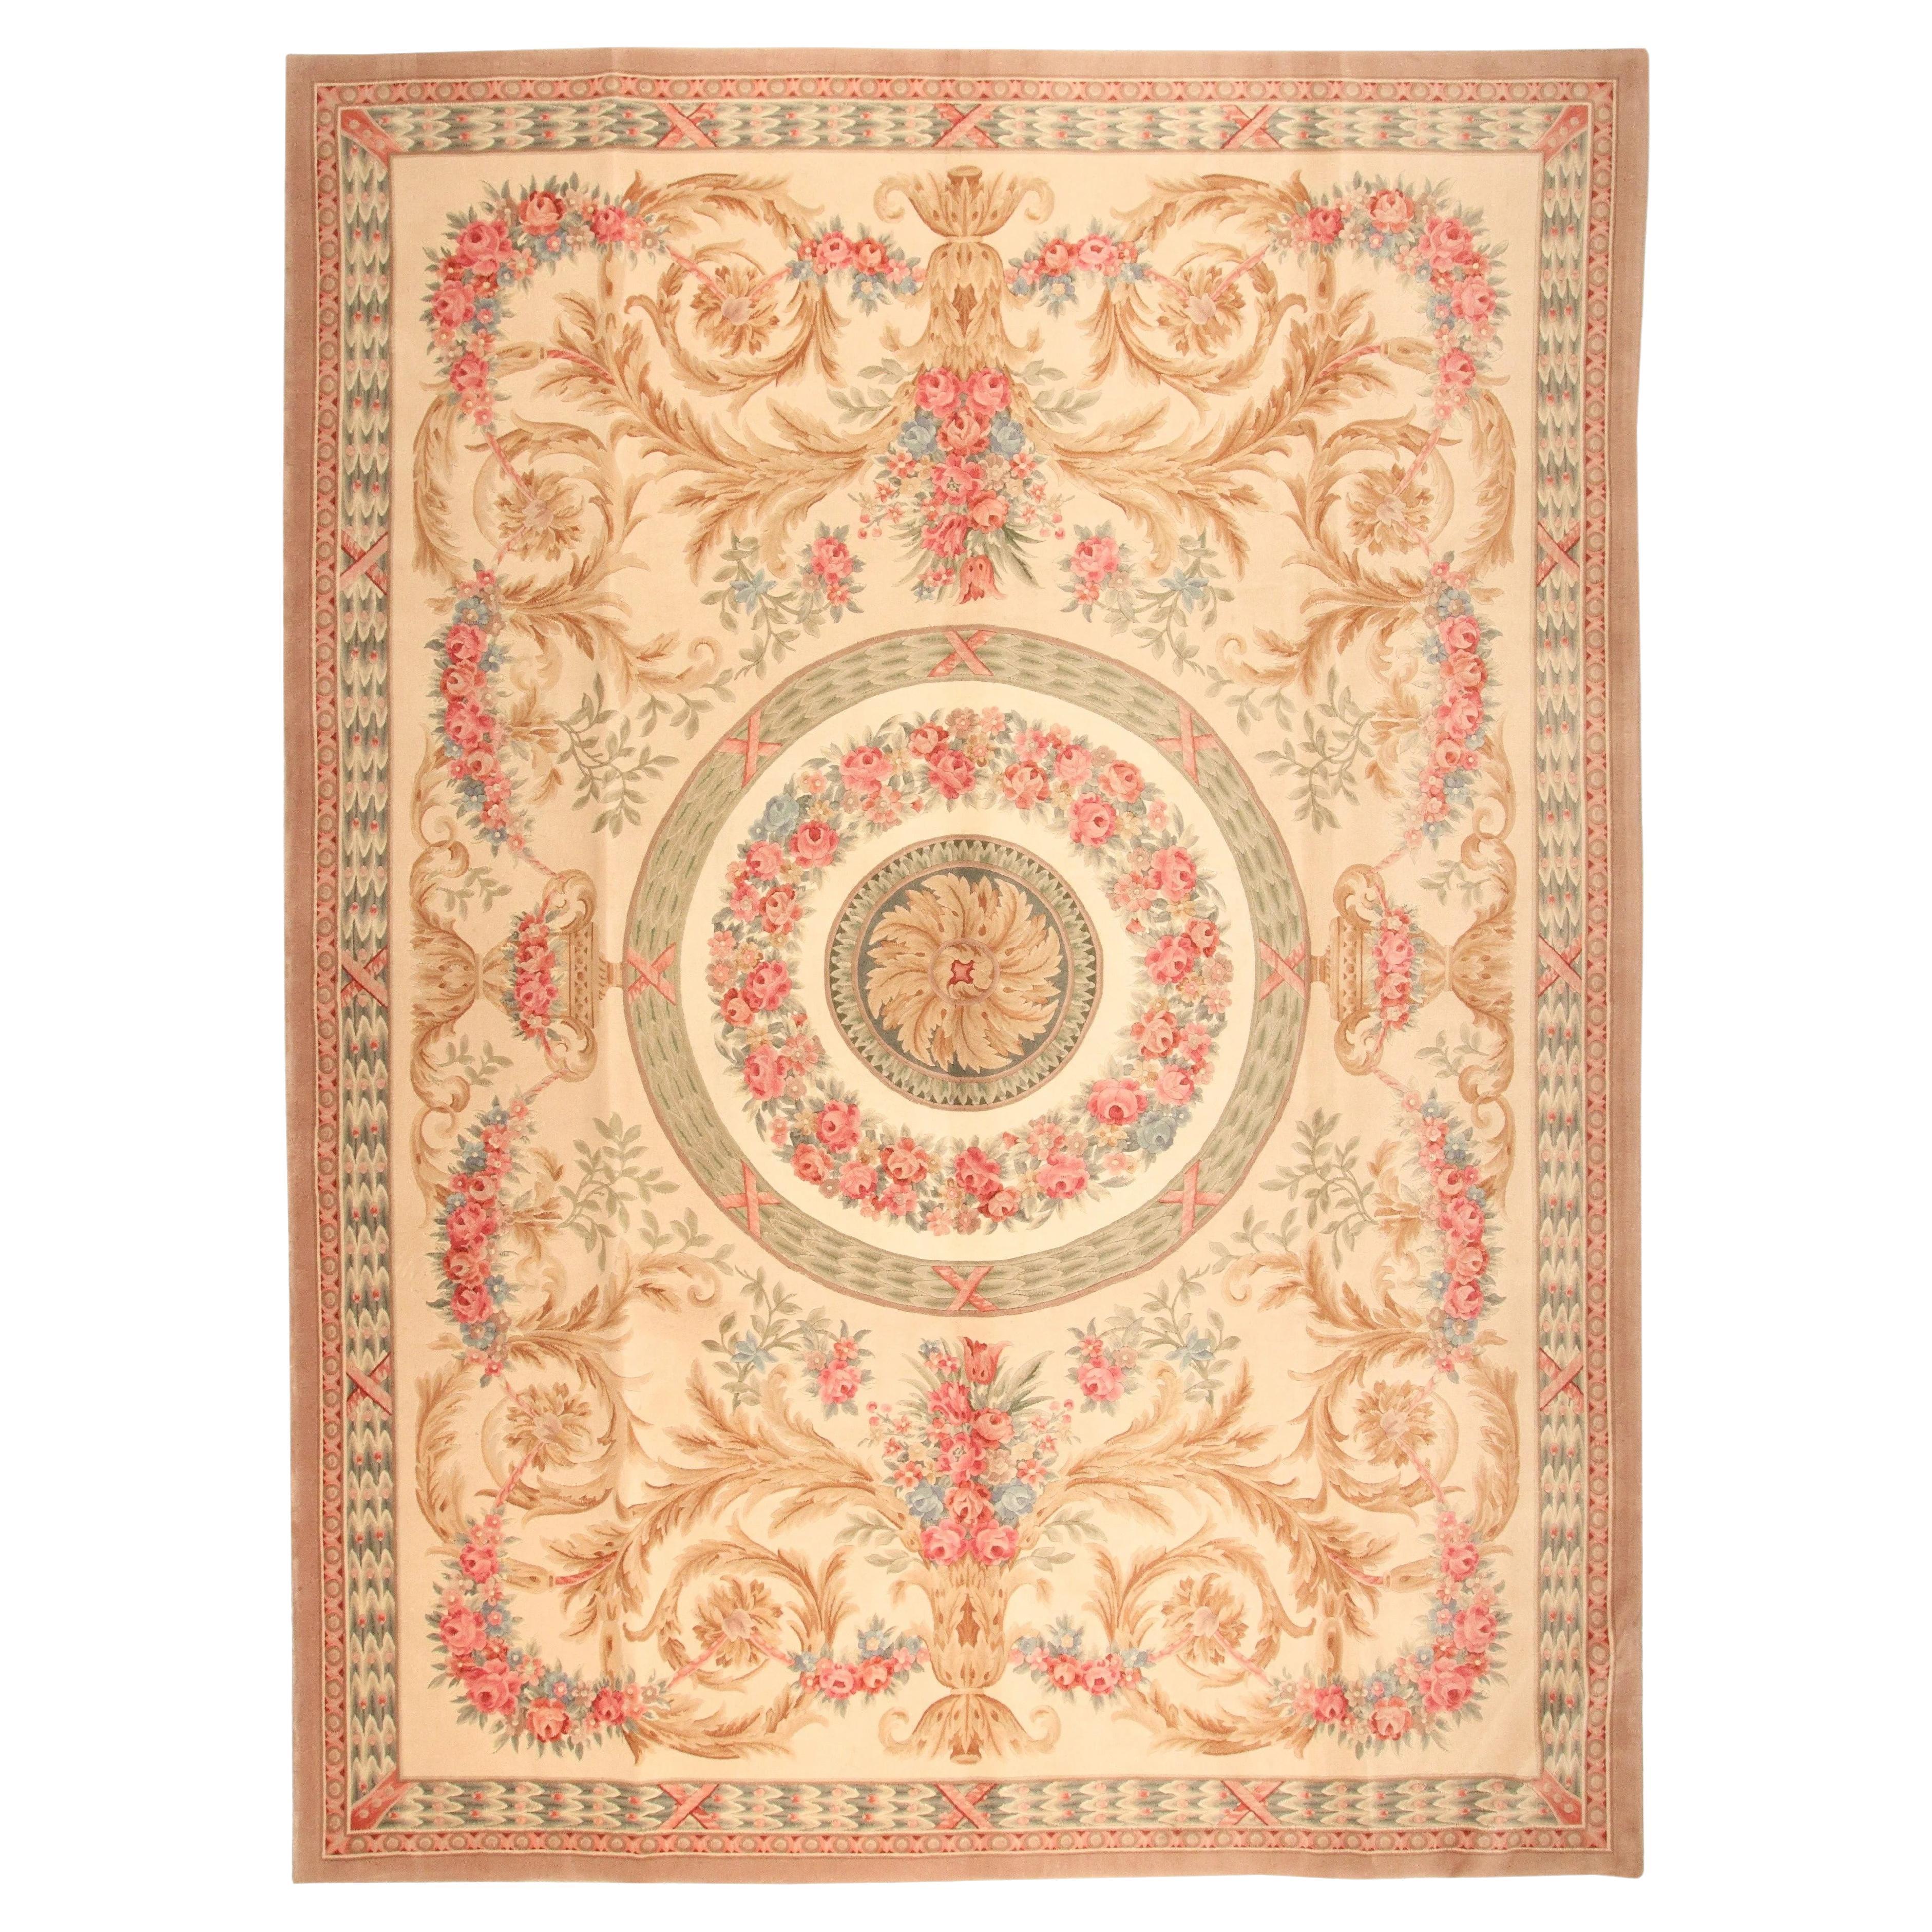 VIA COMO 'Venetian Soft' 10x13 Rug Hand Knotted Carpet One of a Kind Wool & Silk